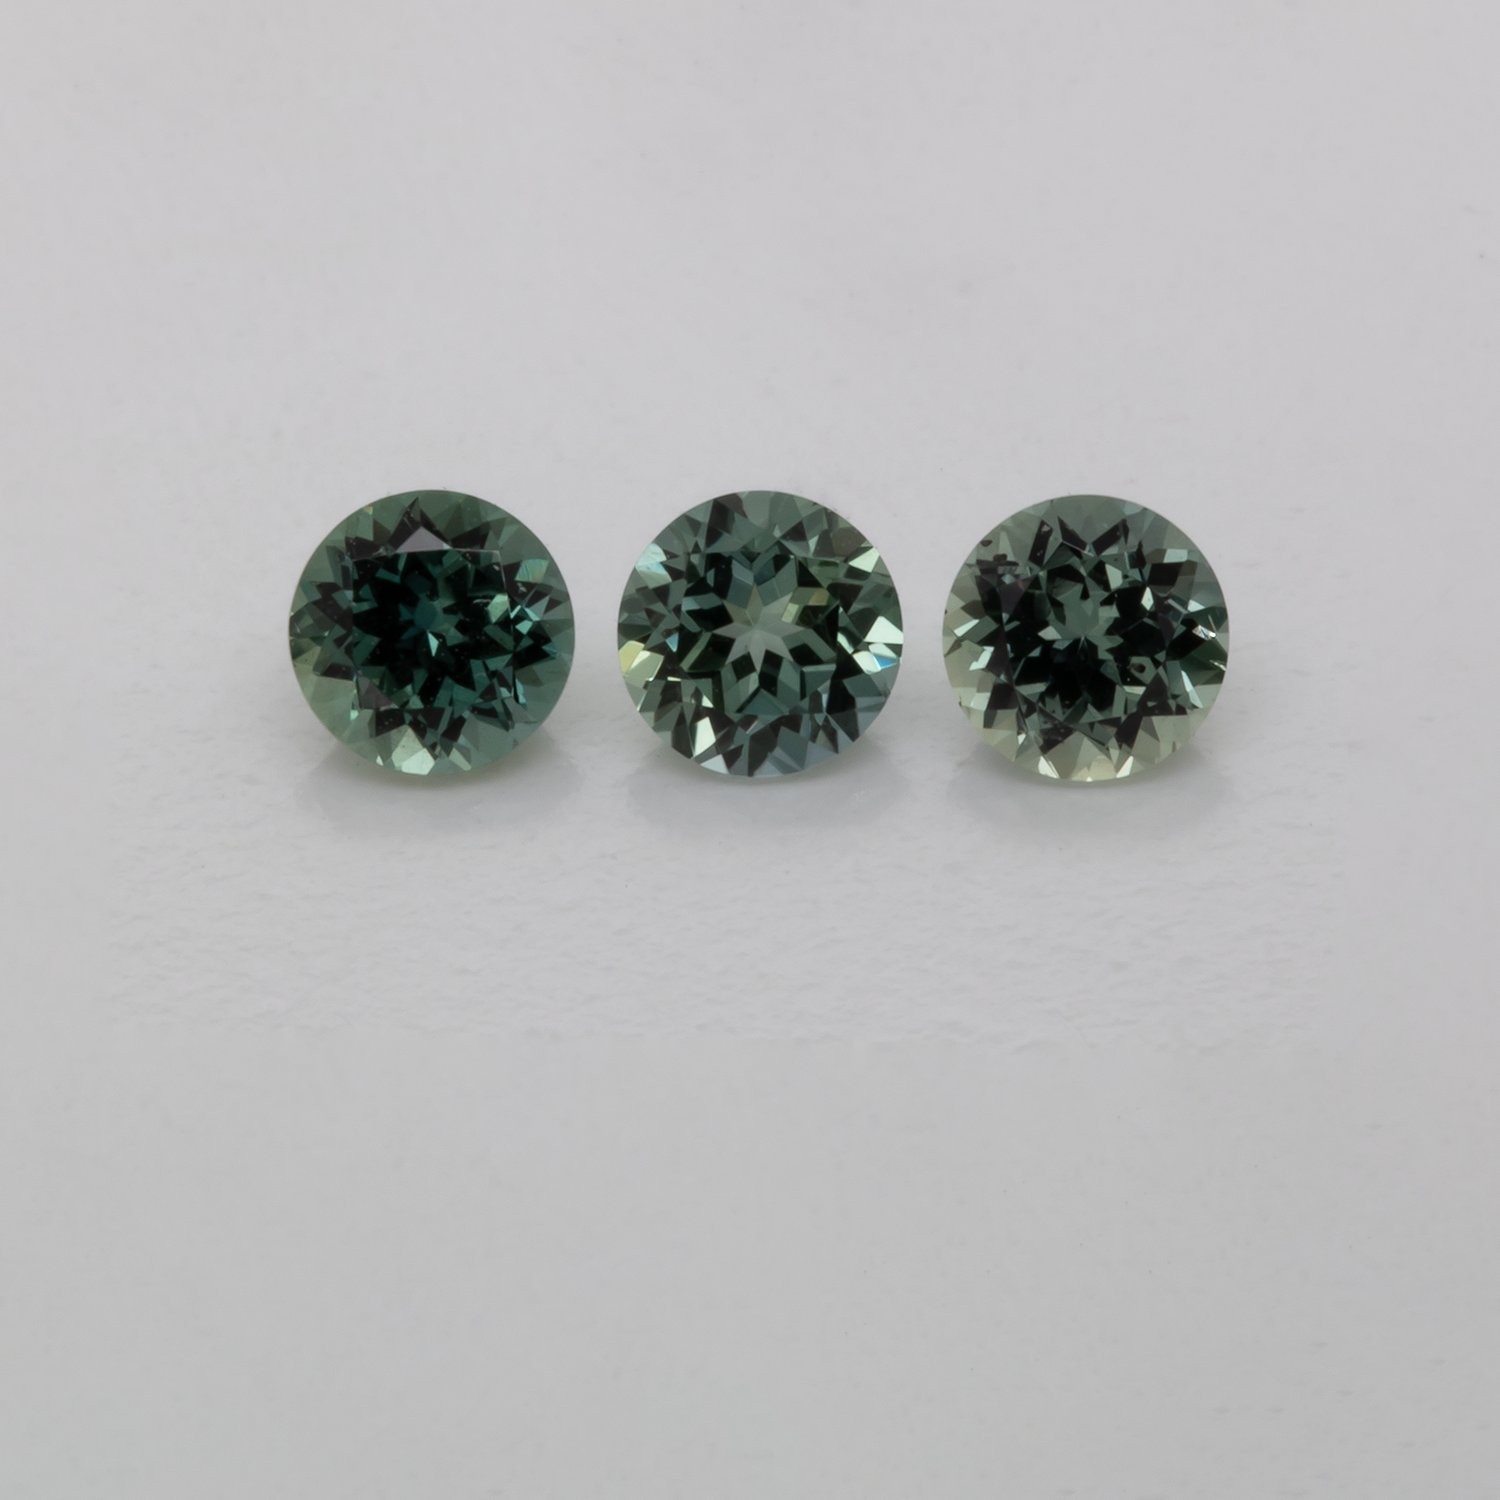 Saphir Set - blau/grün, rund, 3,5x3,5 mm, 0,67 cts, Nr. XSR11189